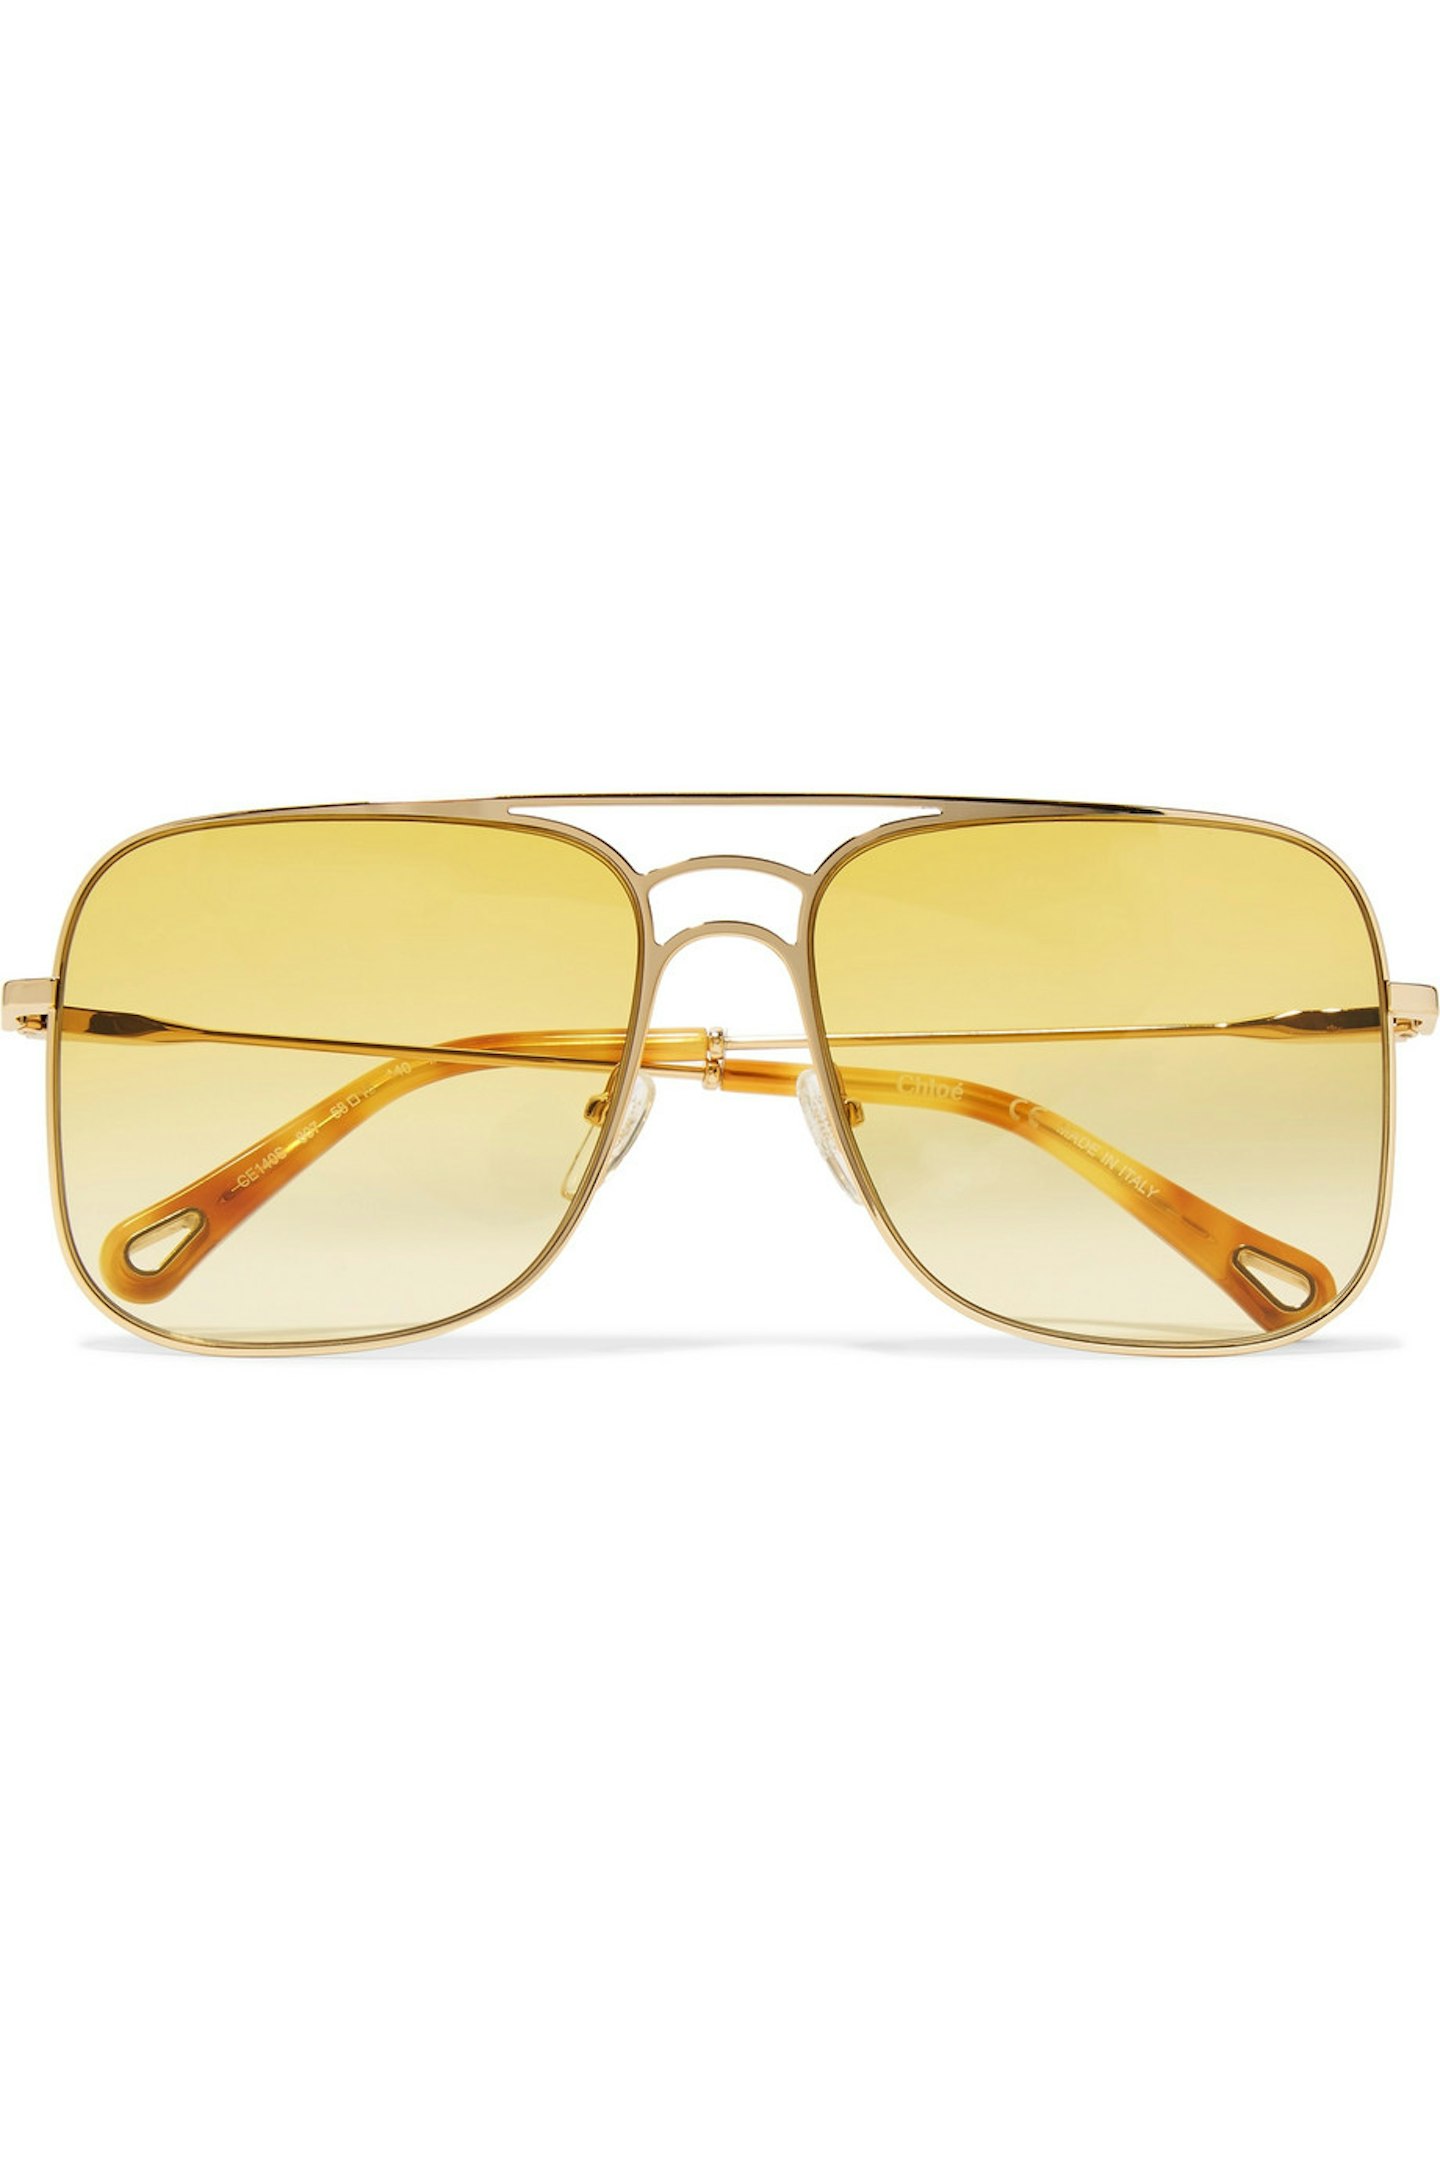 chloe gold aviator sunglasses